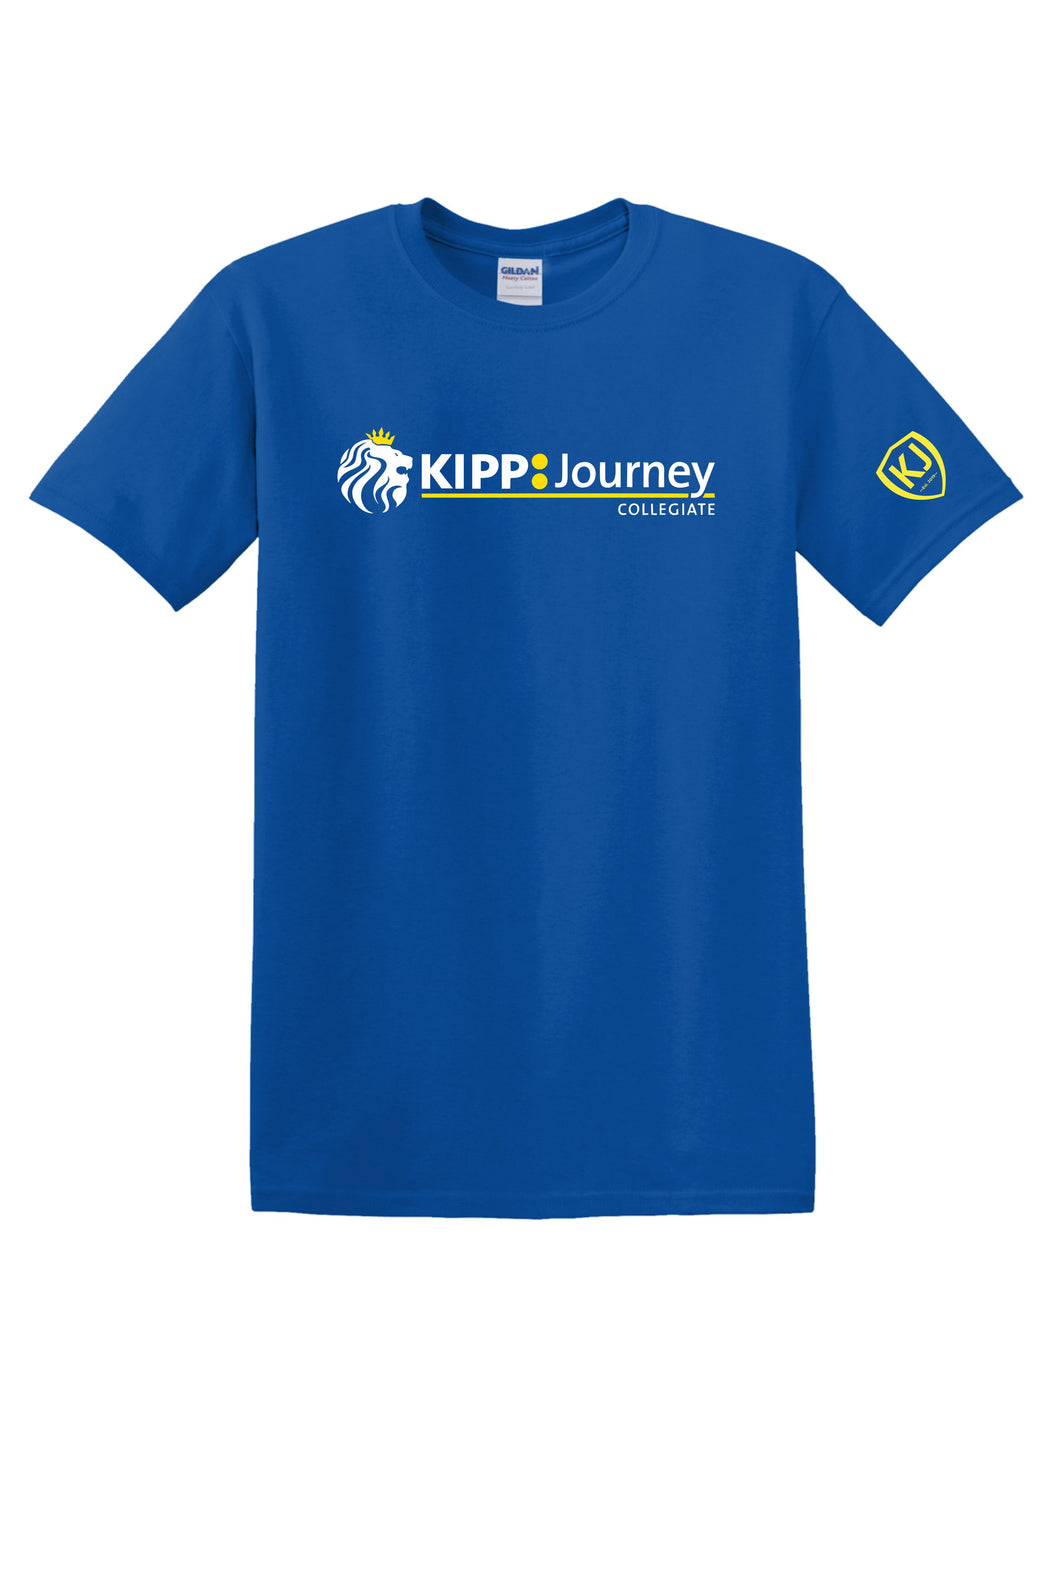 KIPP Journey Collegiate Friday Shirt